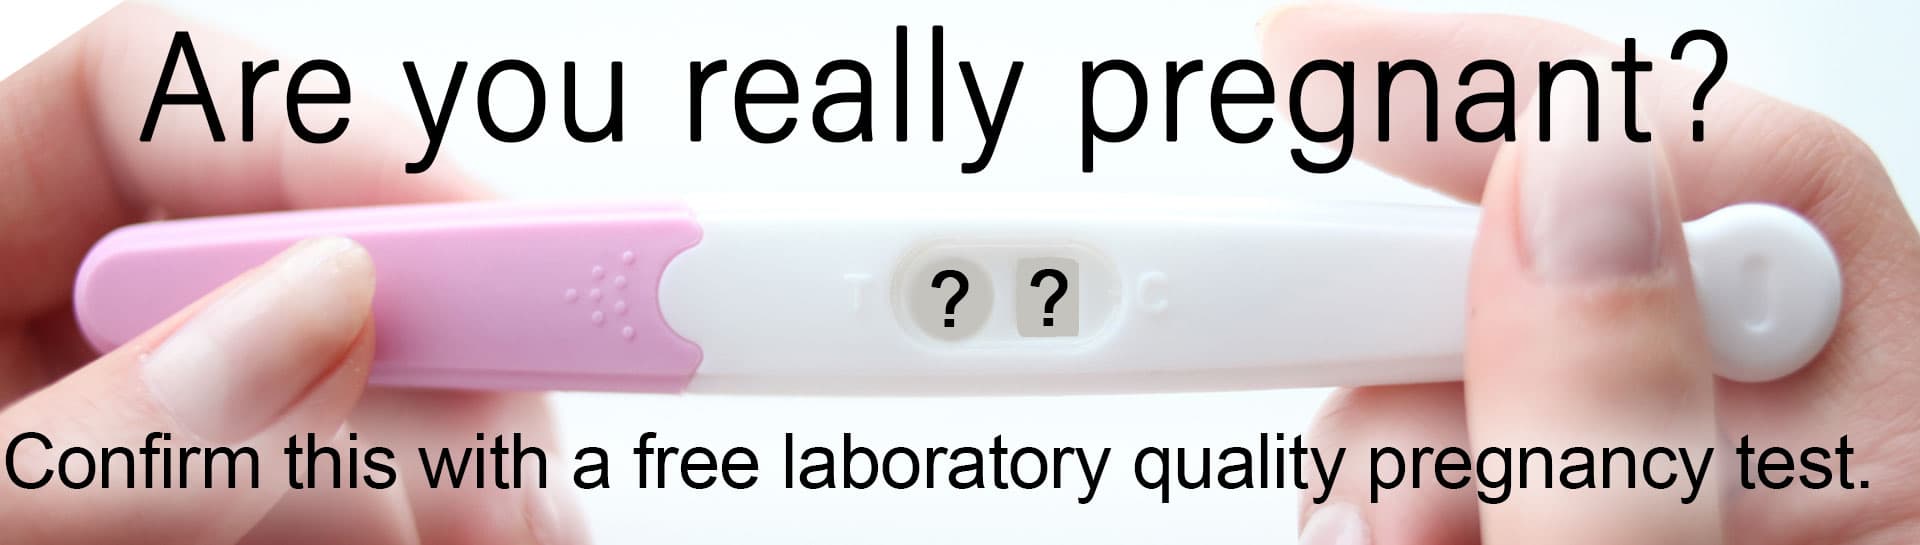 Free Pregnancy Test in Birmingham, Alabama